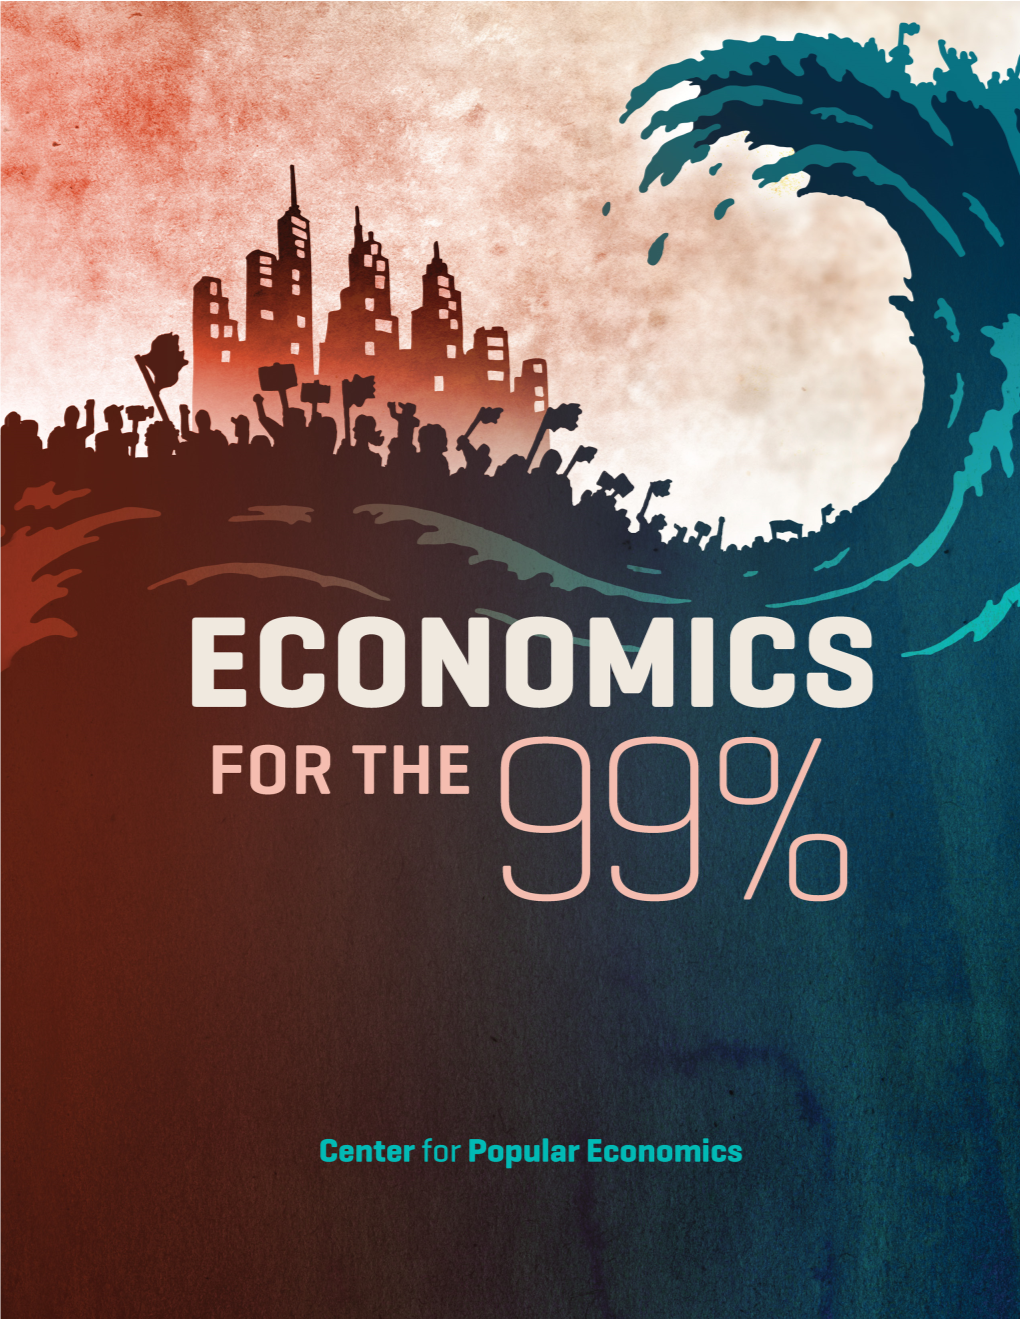 Economics for the 99%, July 23-27, Columbia University, NYC